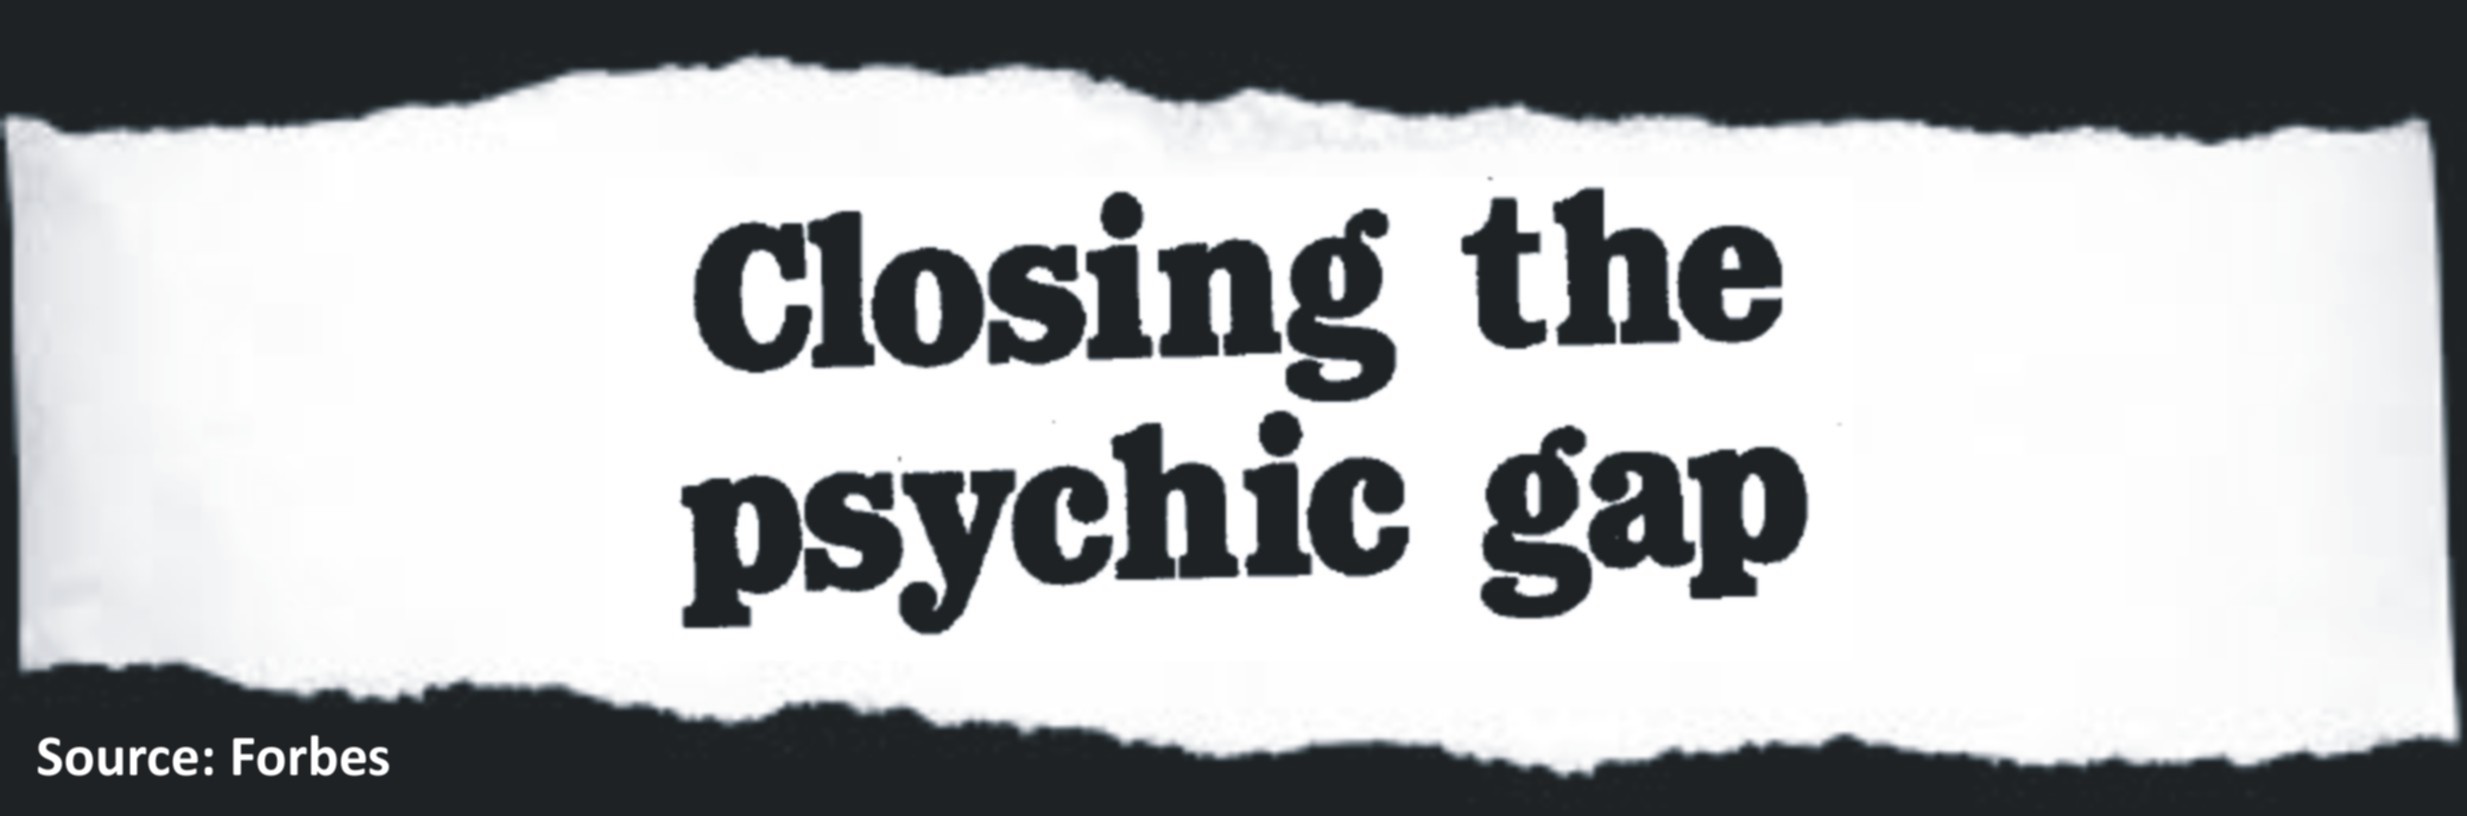 Closing the psychic gap